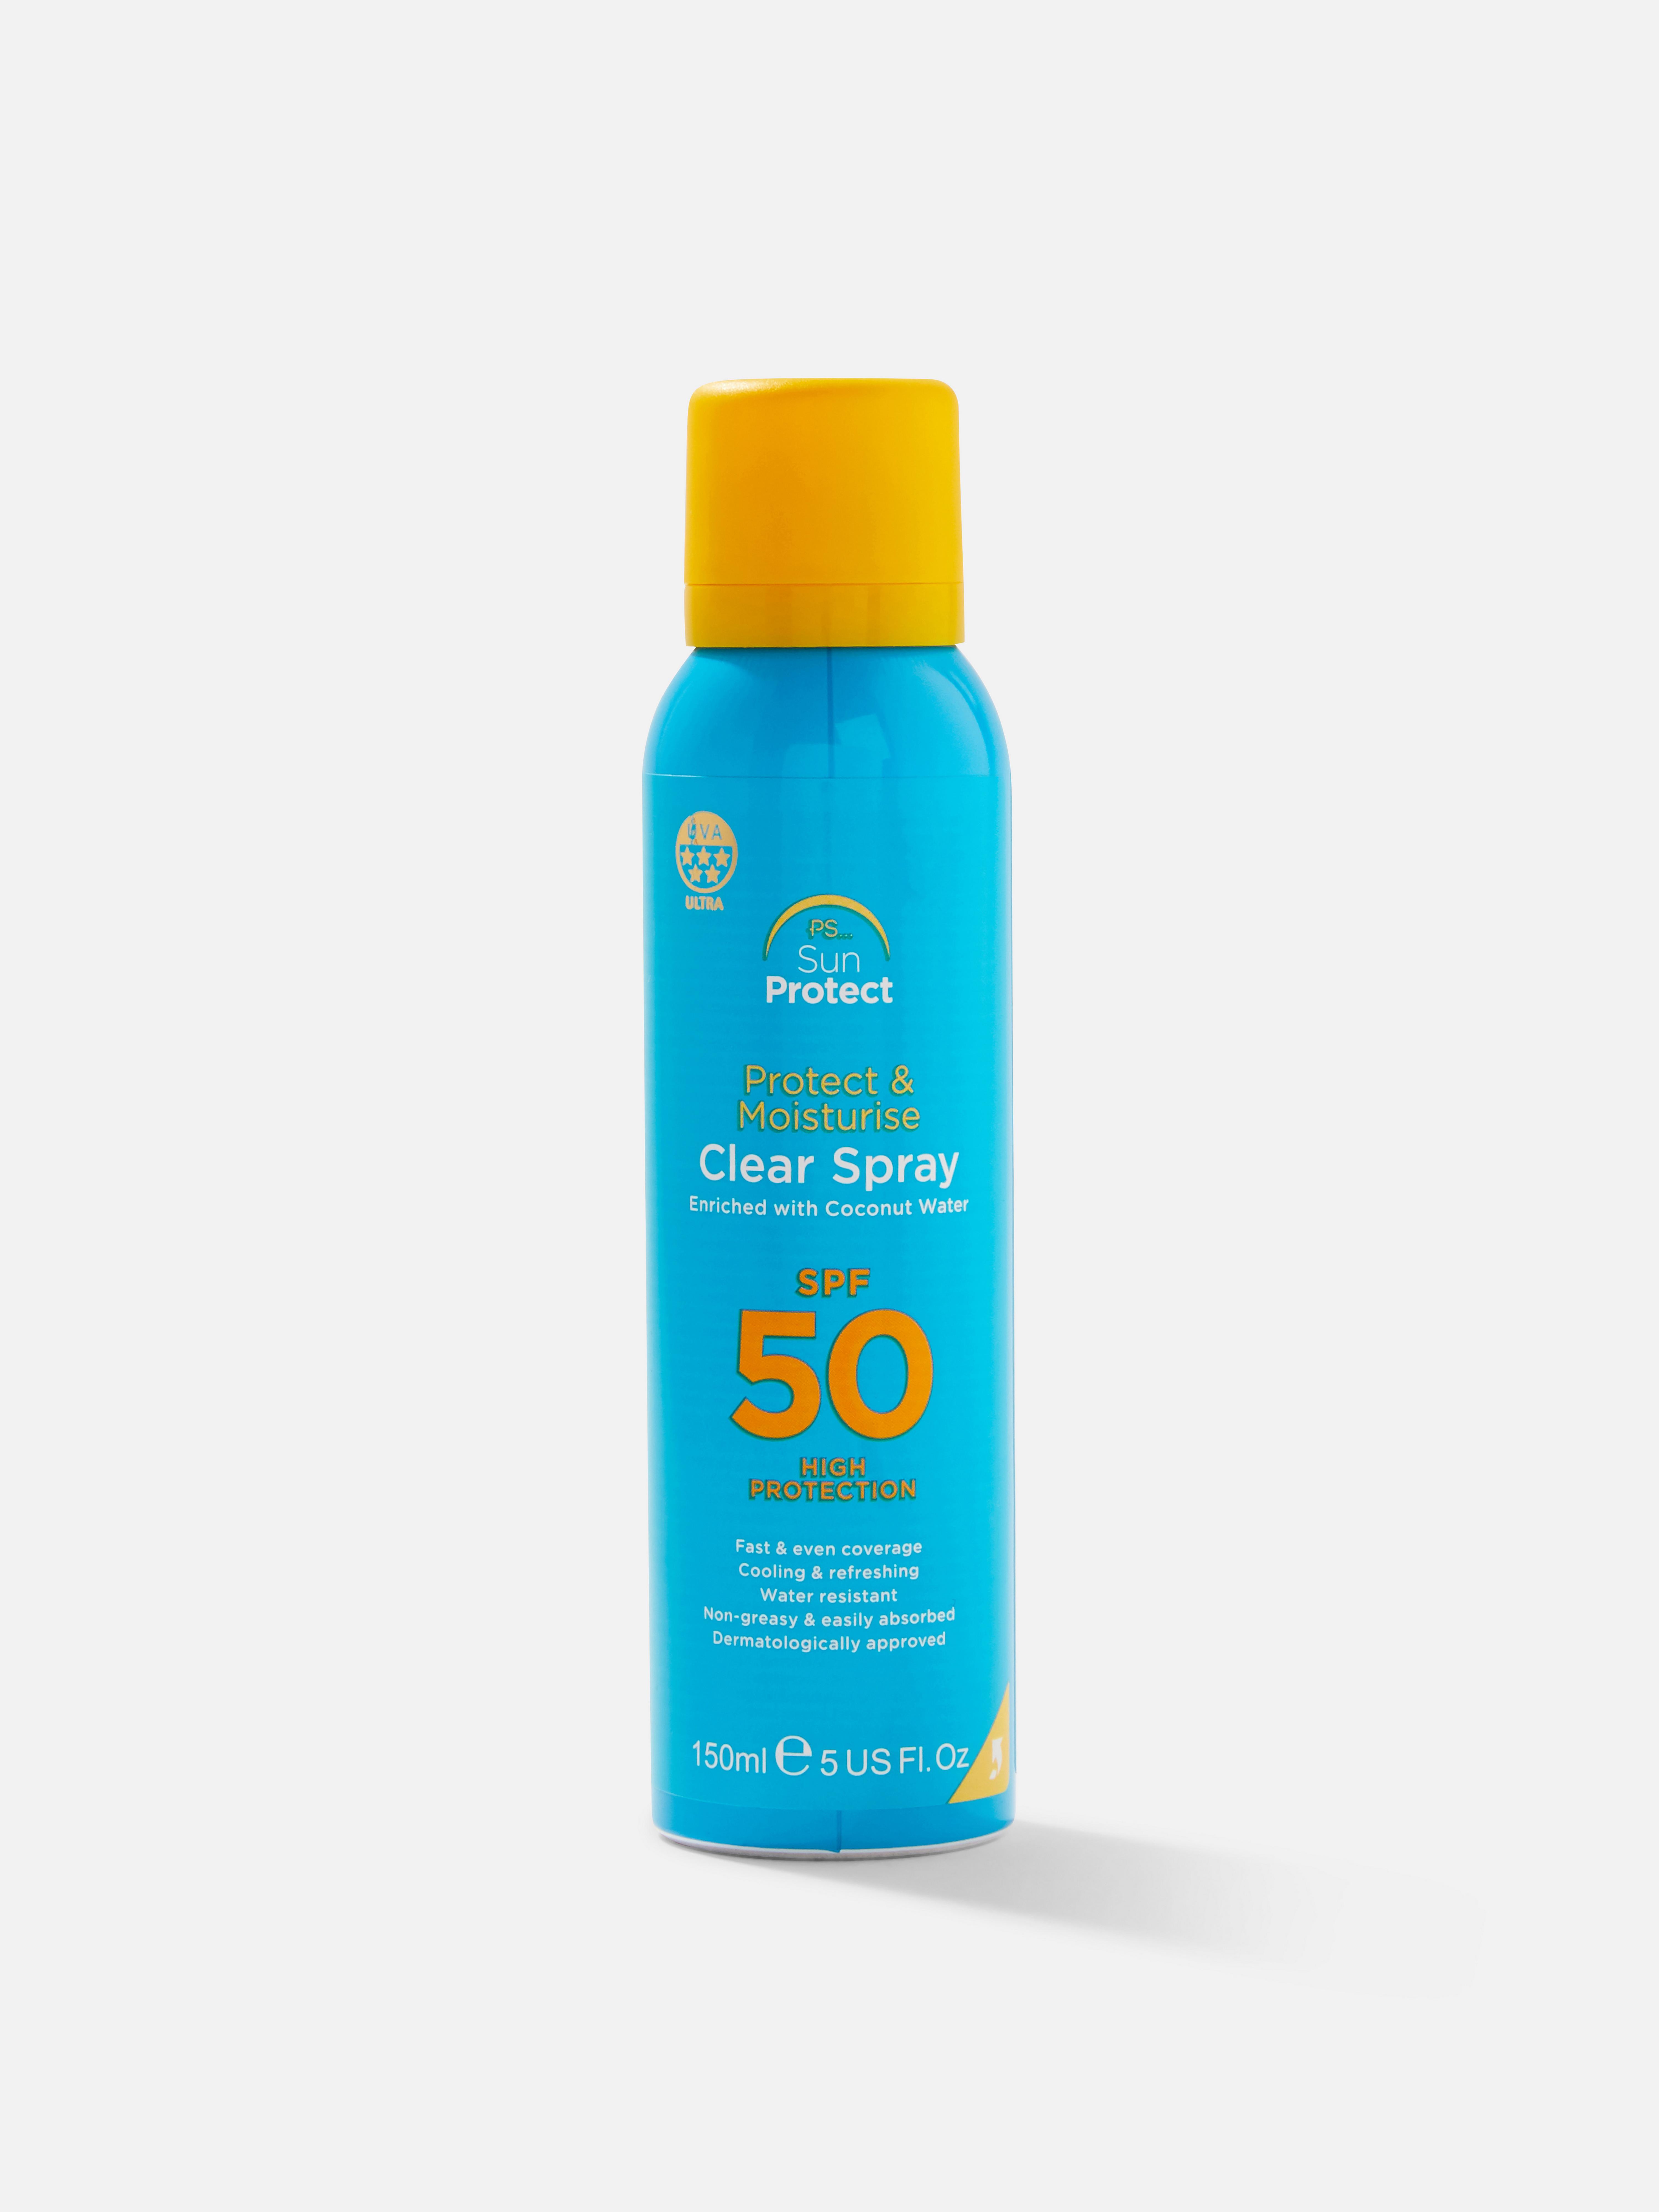 PS UVA 50 SPF Sun Protect Clear Spray